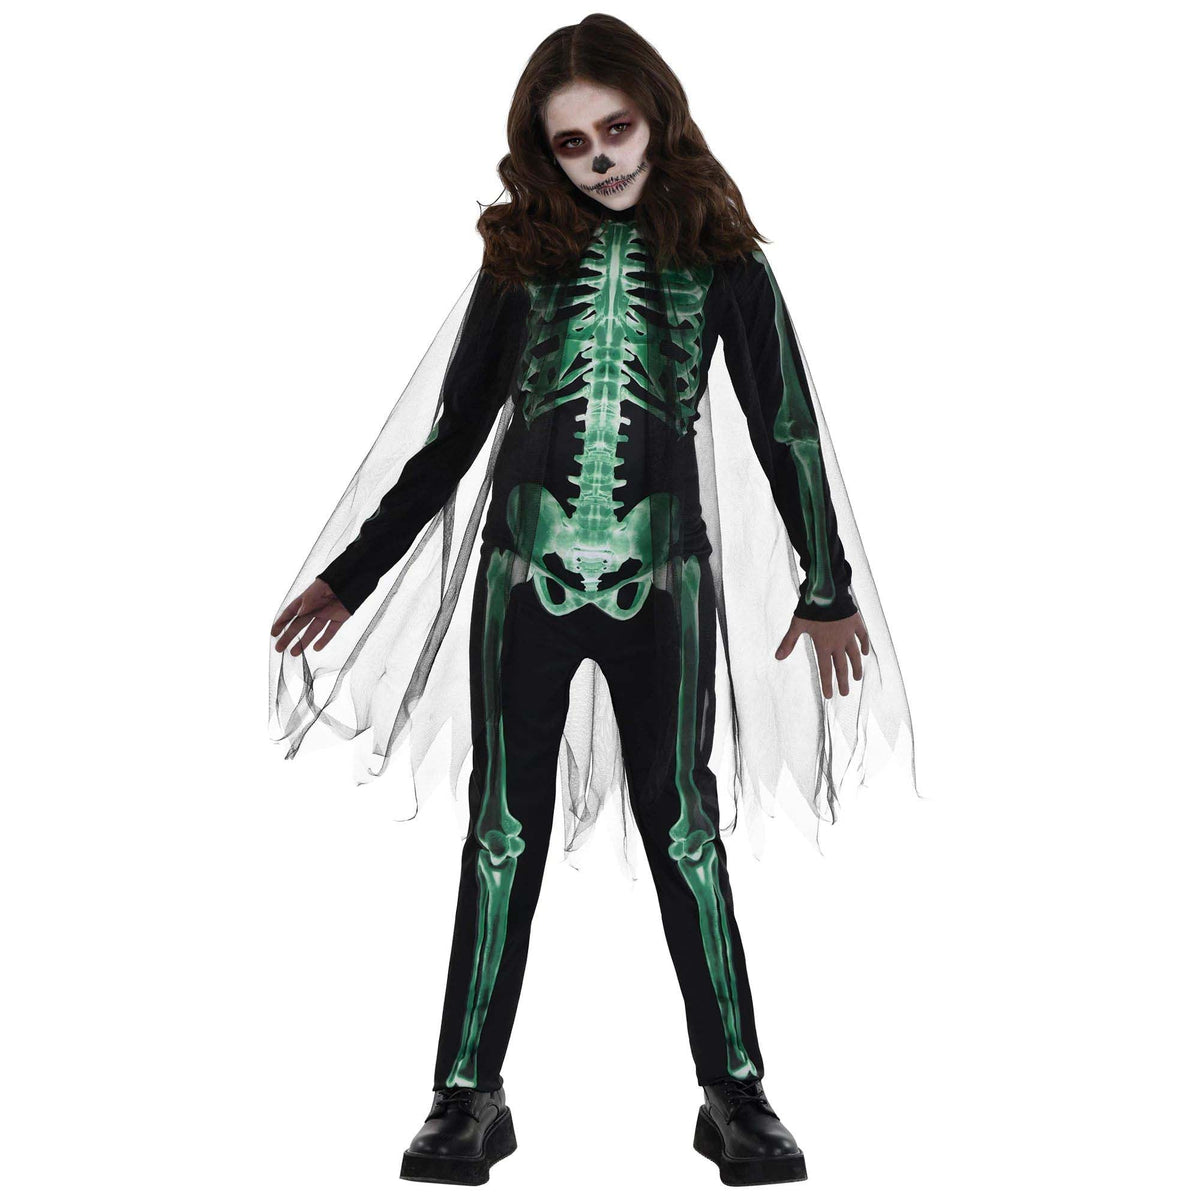 HALLOWEEN COSTUME CO. Costumes Glow in the Dark Reaper Costume for Kids